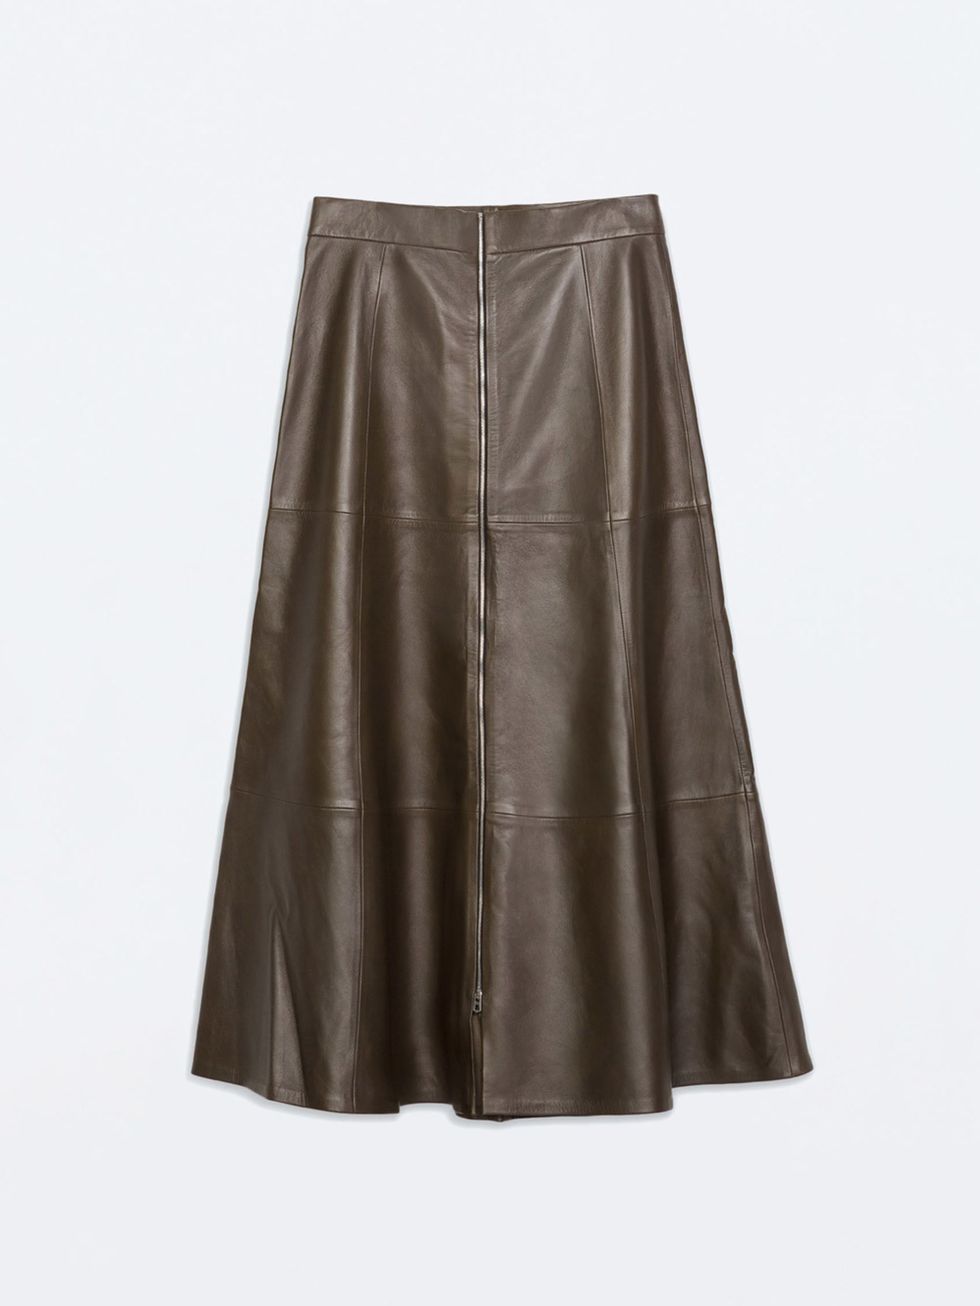 Brown, Textile, Grey, Beige, Satin, Silk, Leather, Silver, Pocket, Fashion design, 